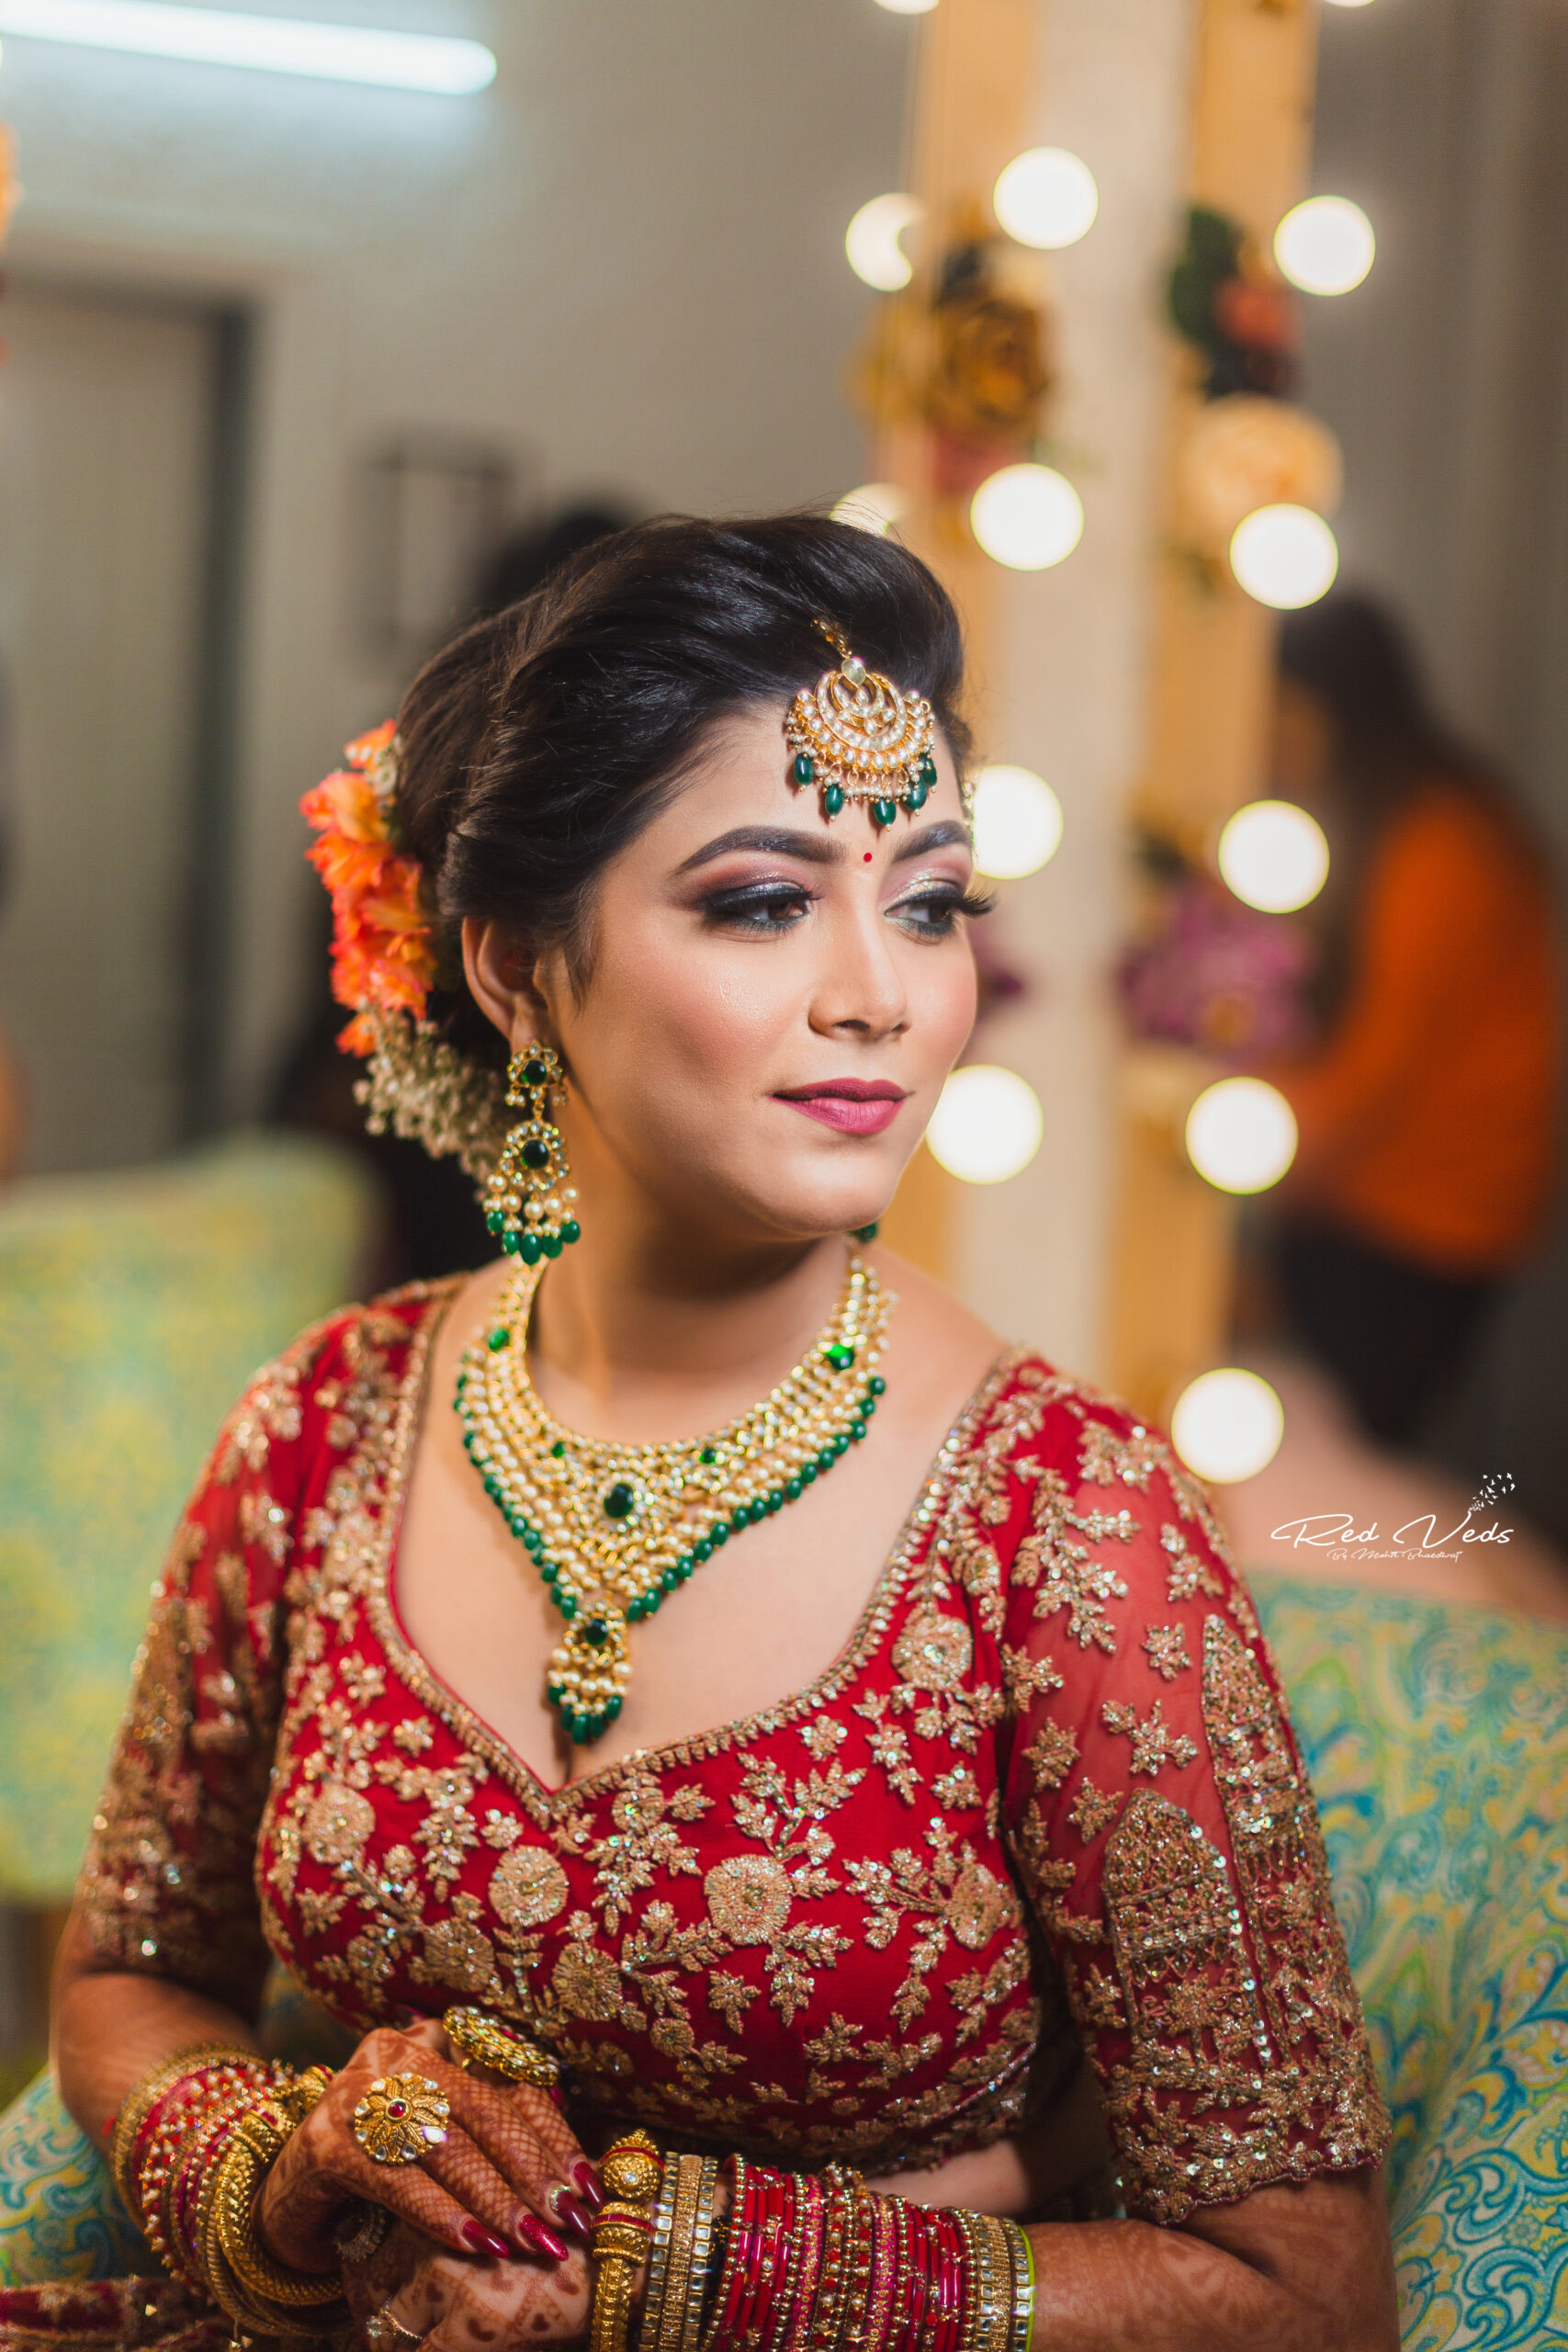 Bengali Wedding Pose added a new photo. - Bengali Wedding Pose